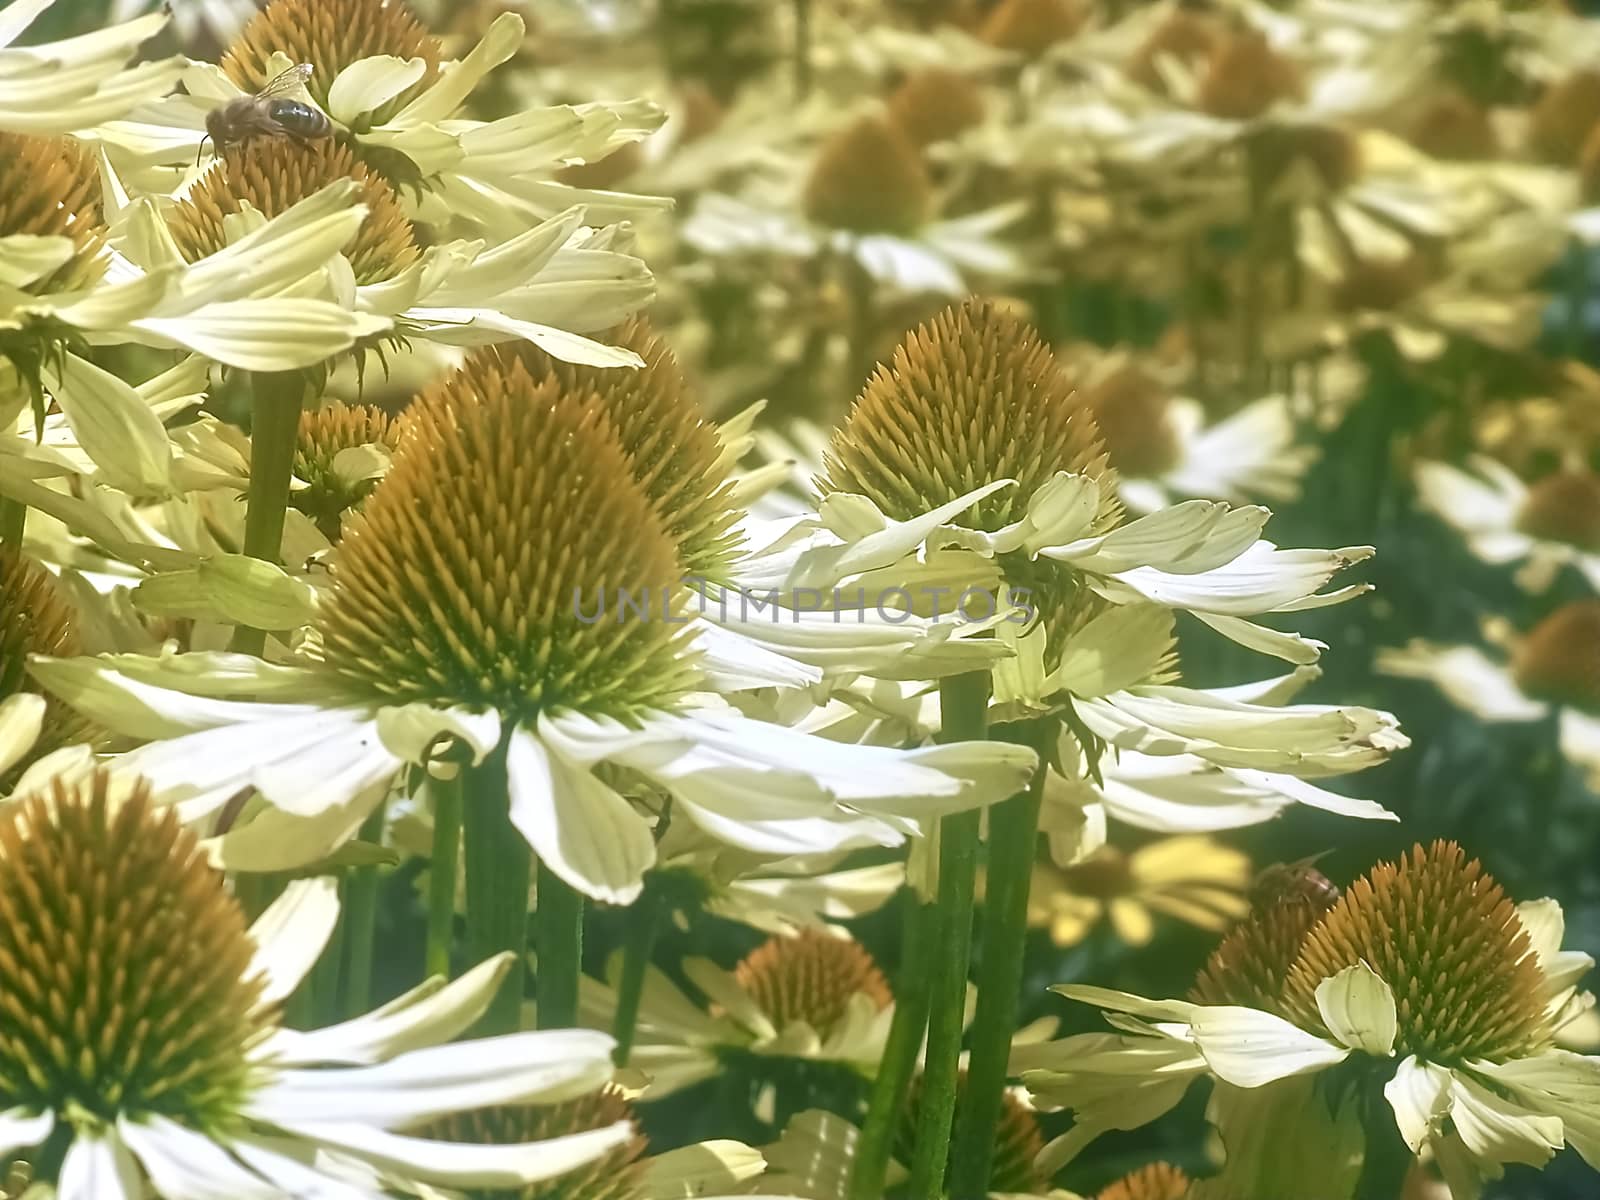 Macro of yellow echinacea or summer hat flowers by Stimmungsbilder